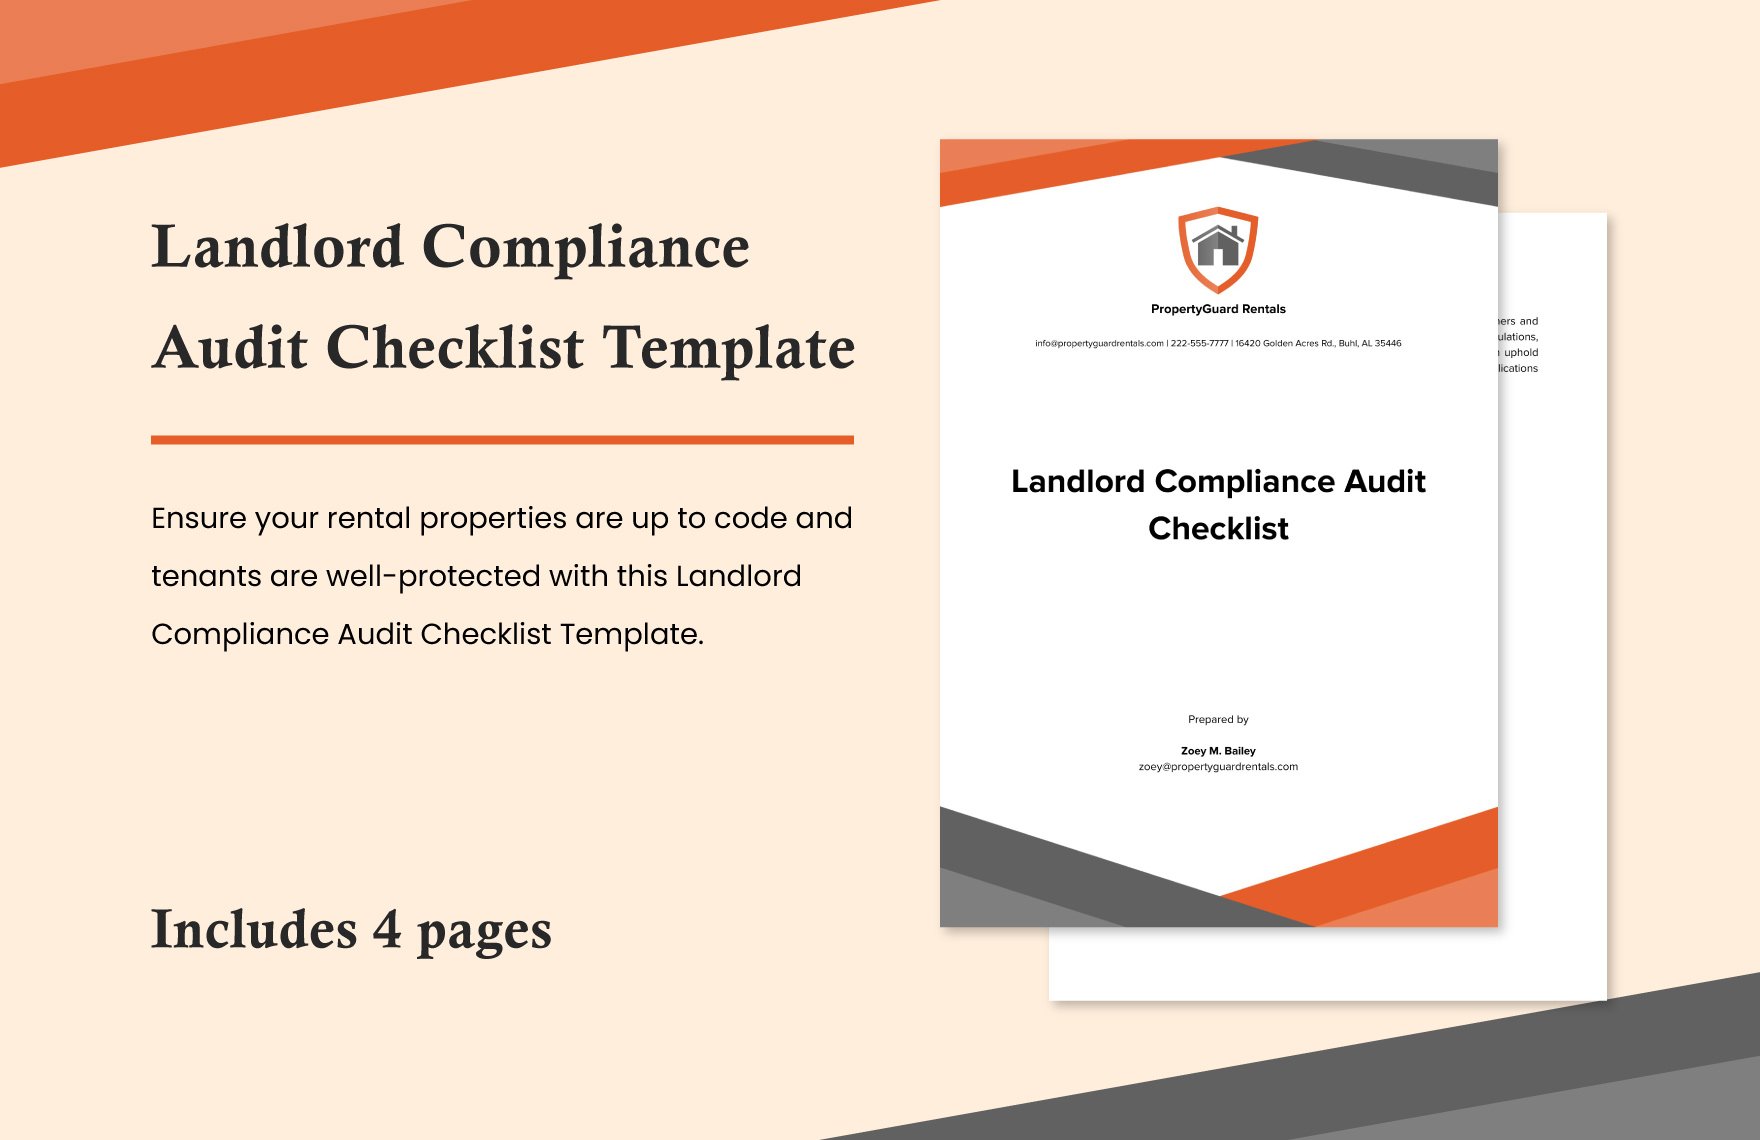 Landlord Compliance Audit Checklist Template